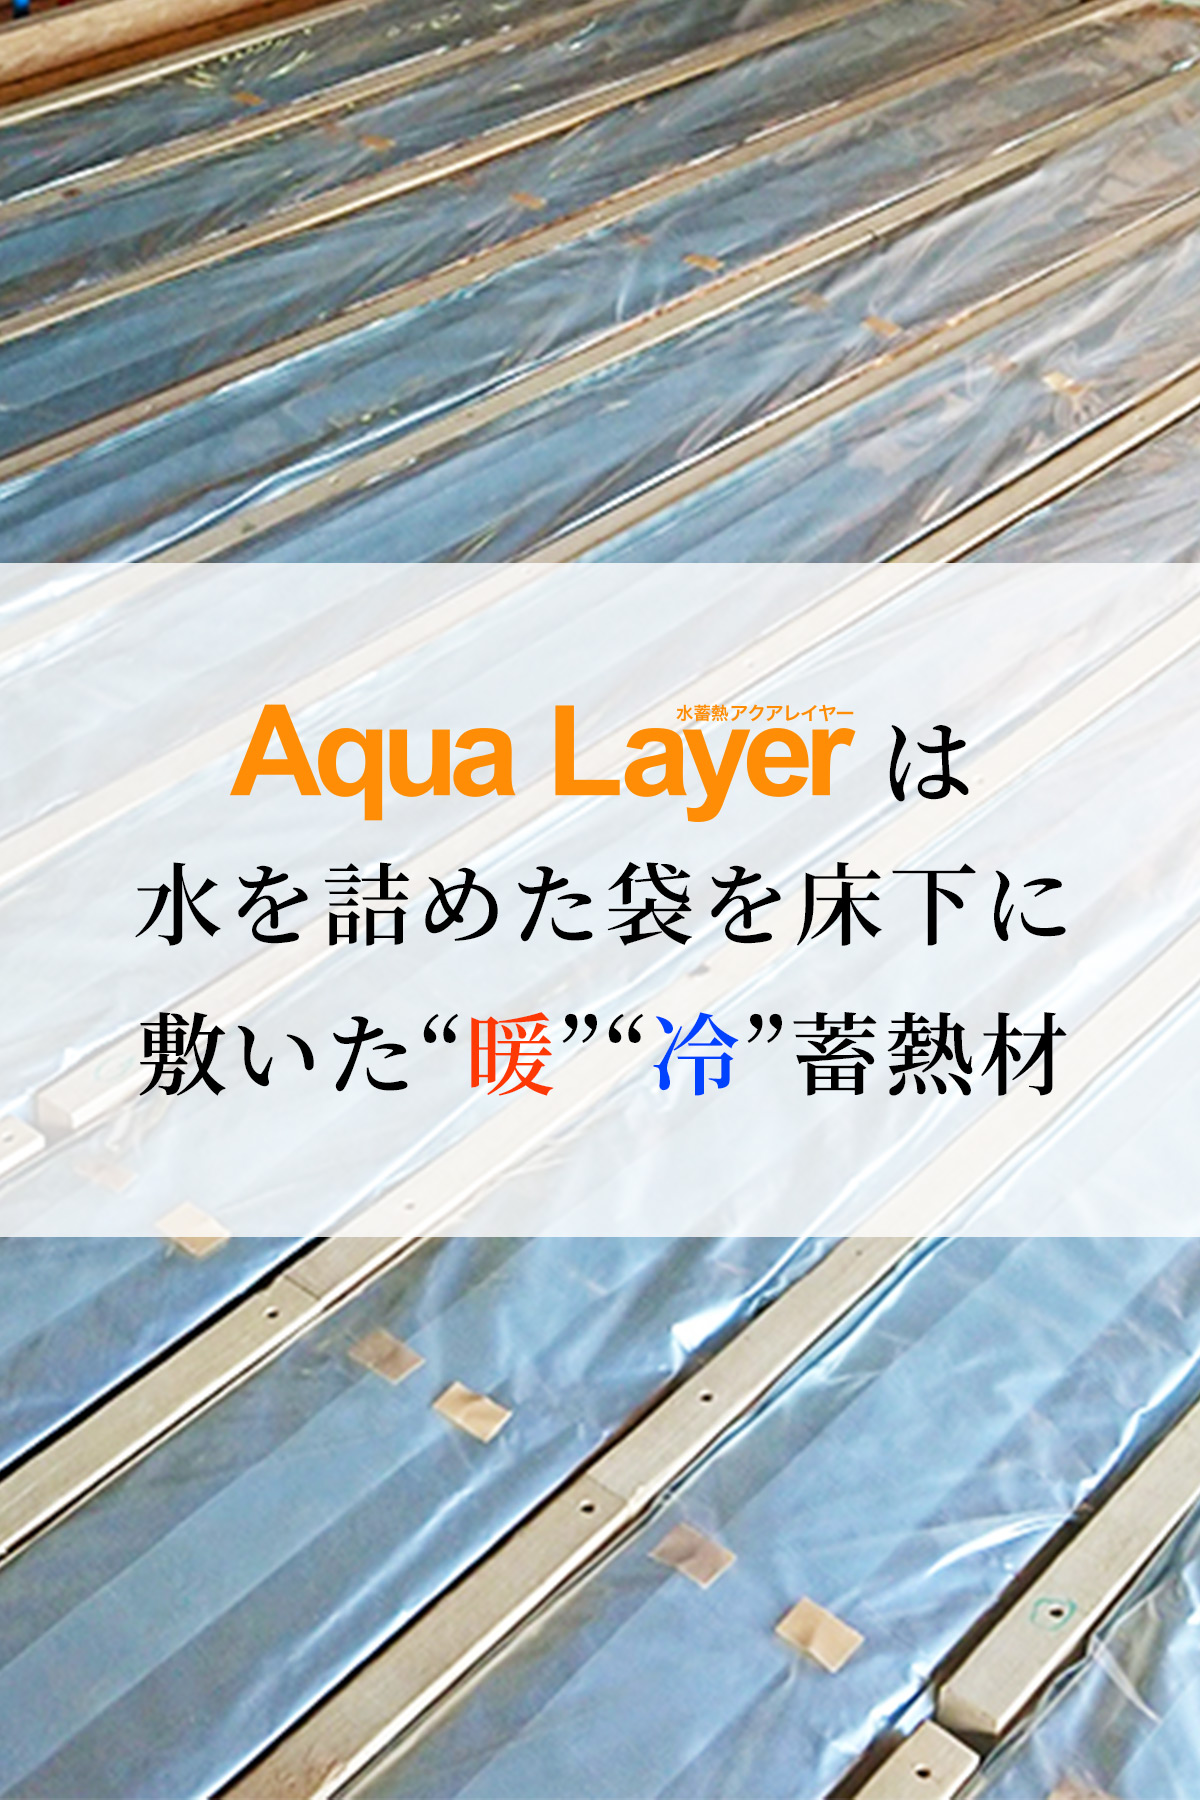 Aqua Layerは水を詰めた袋を床下に敷いた“暖”“冷”蓄熱材